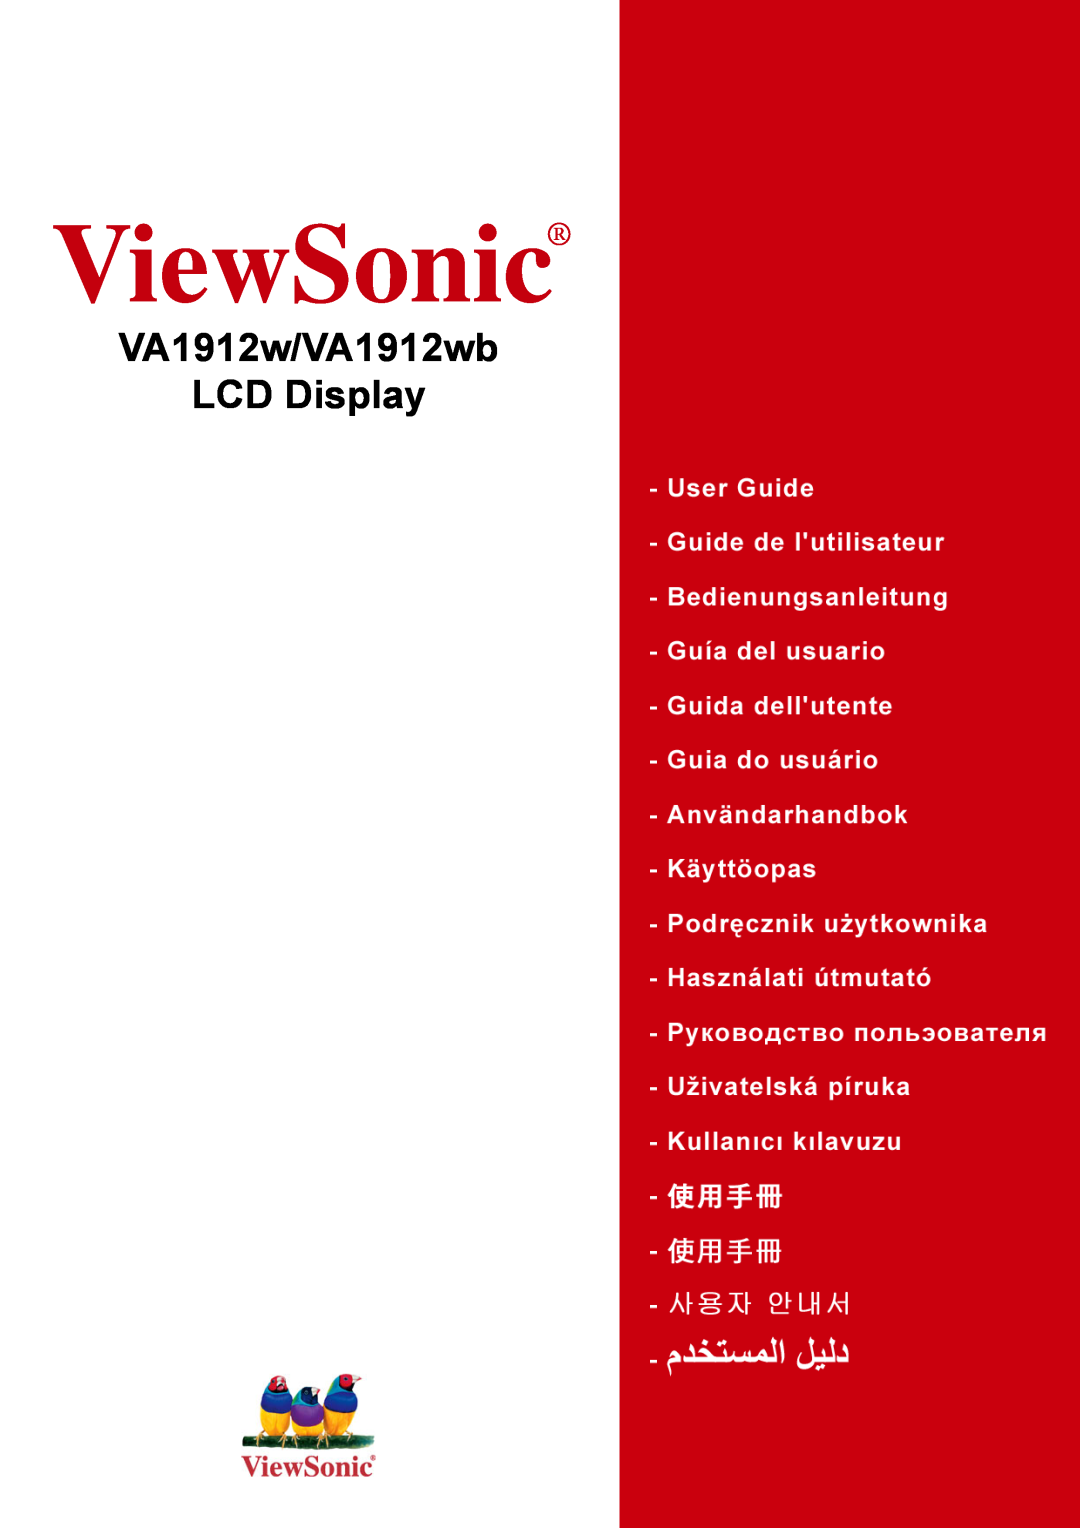 ViewSonic VA1912w-1, VA1912wb-1 manual ViewSonic, VA1912w/VA1912wb LCD Display 